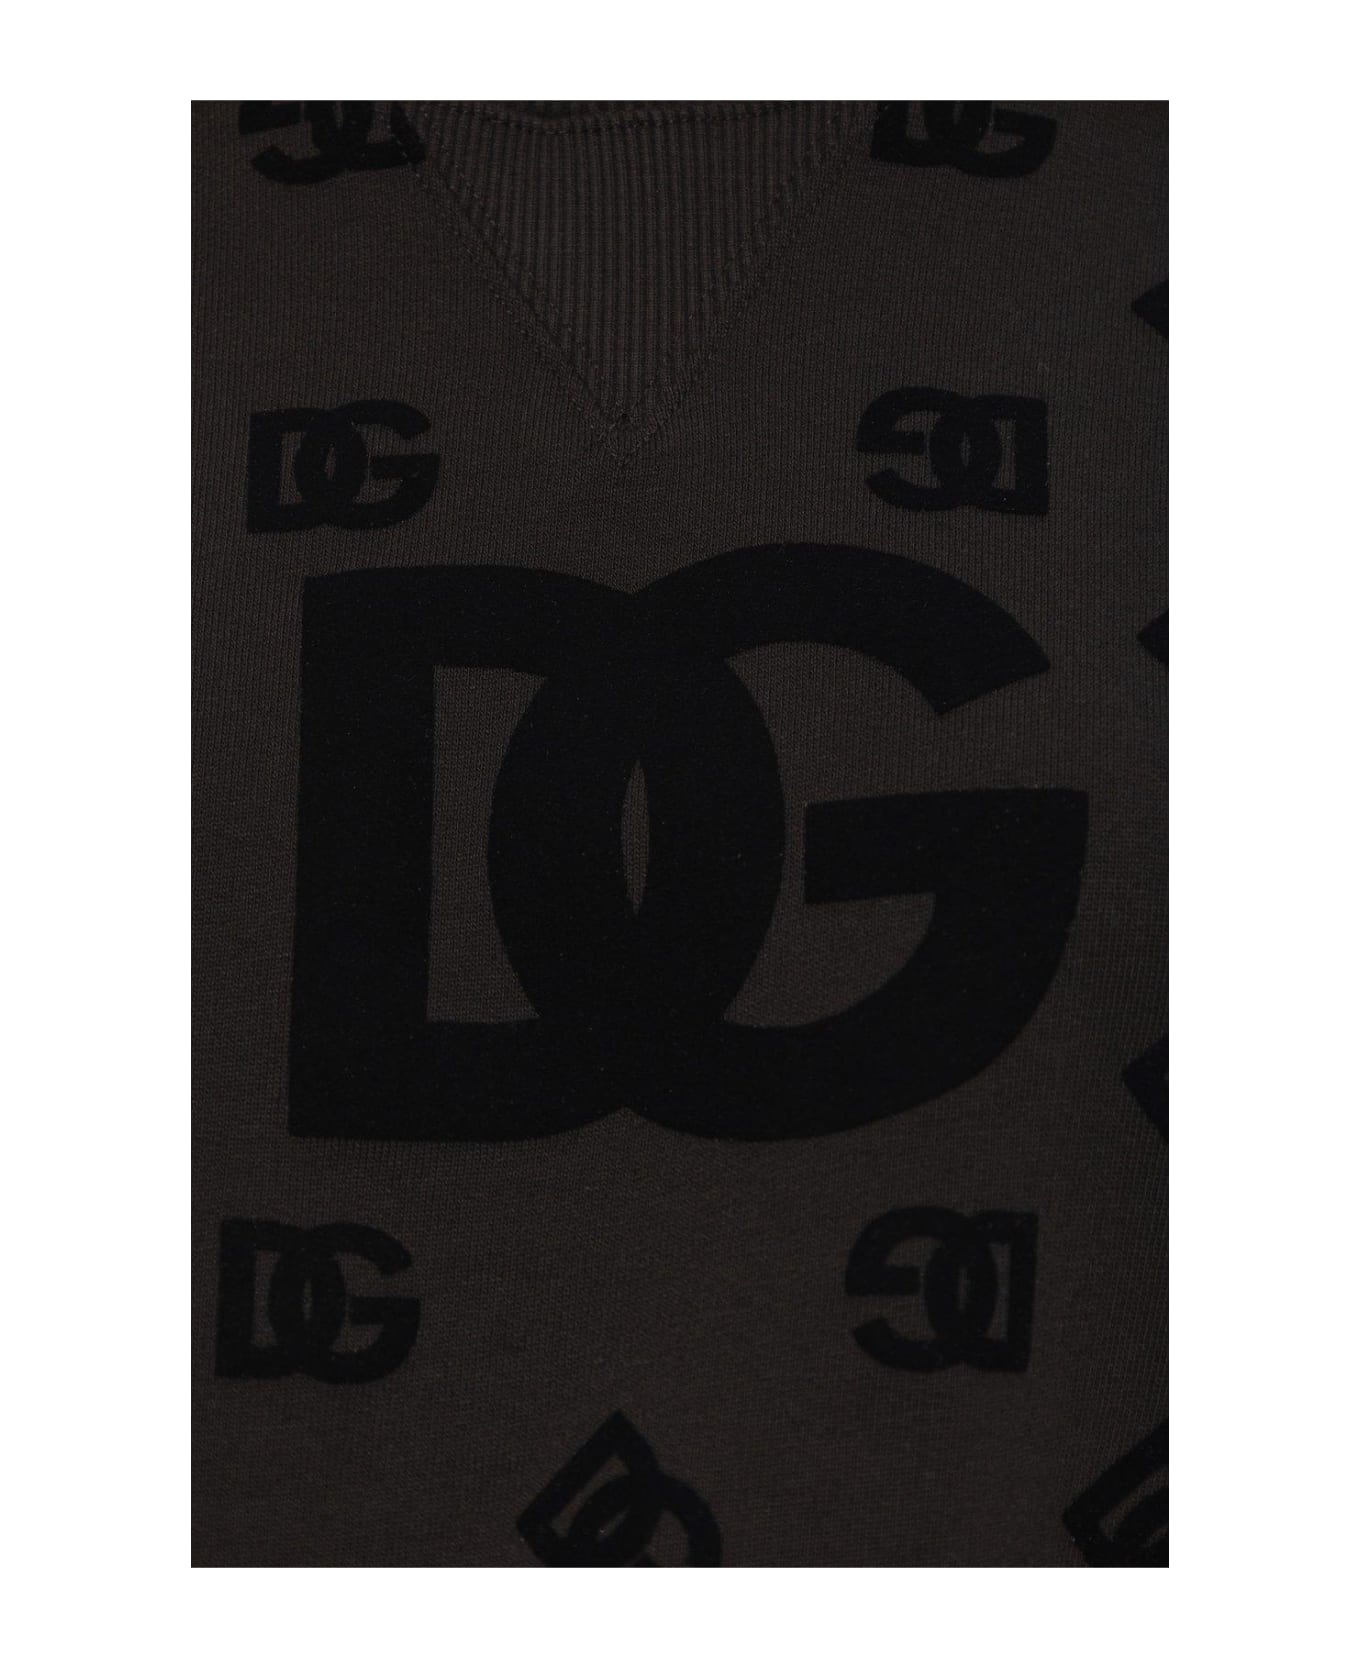 Dolce & Gabbana Dg Logo Flocked Jersey Sweatshirt - Variante Abbinata